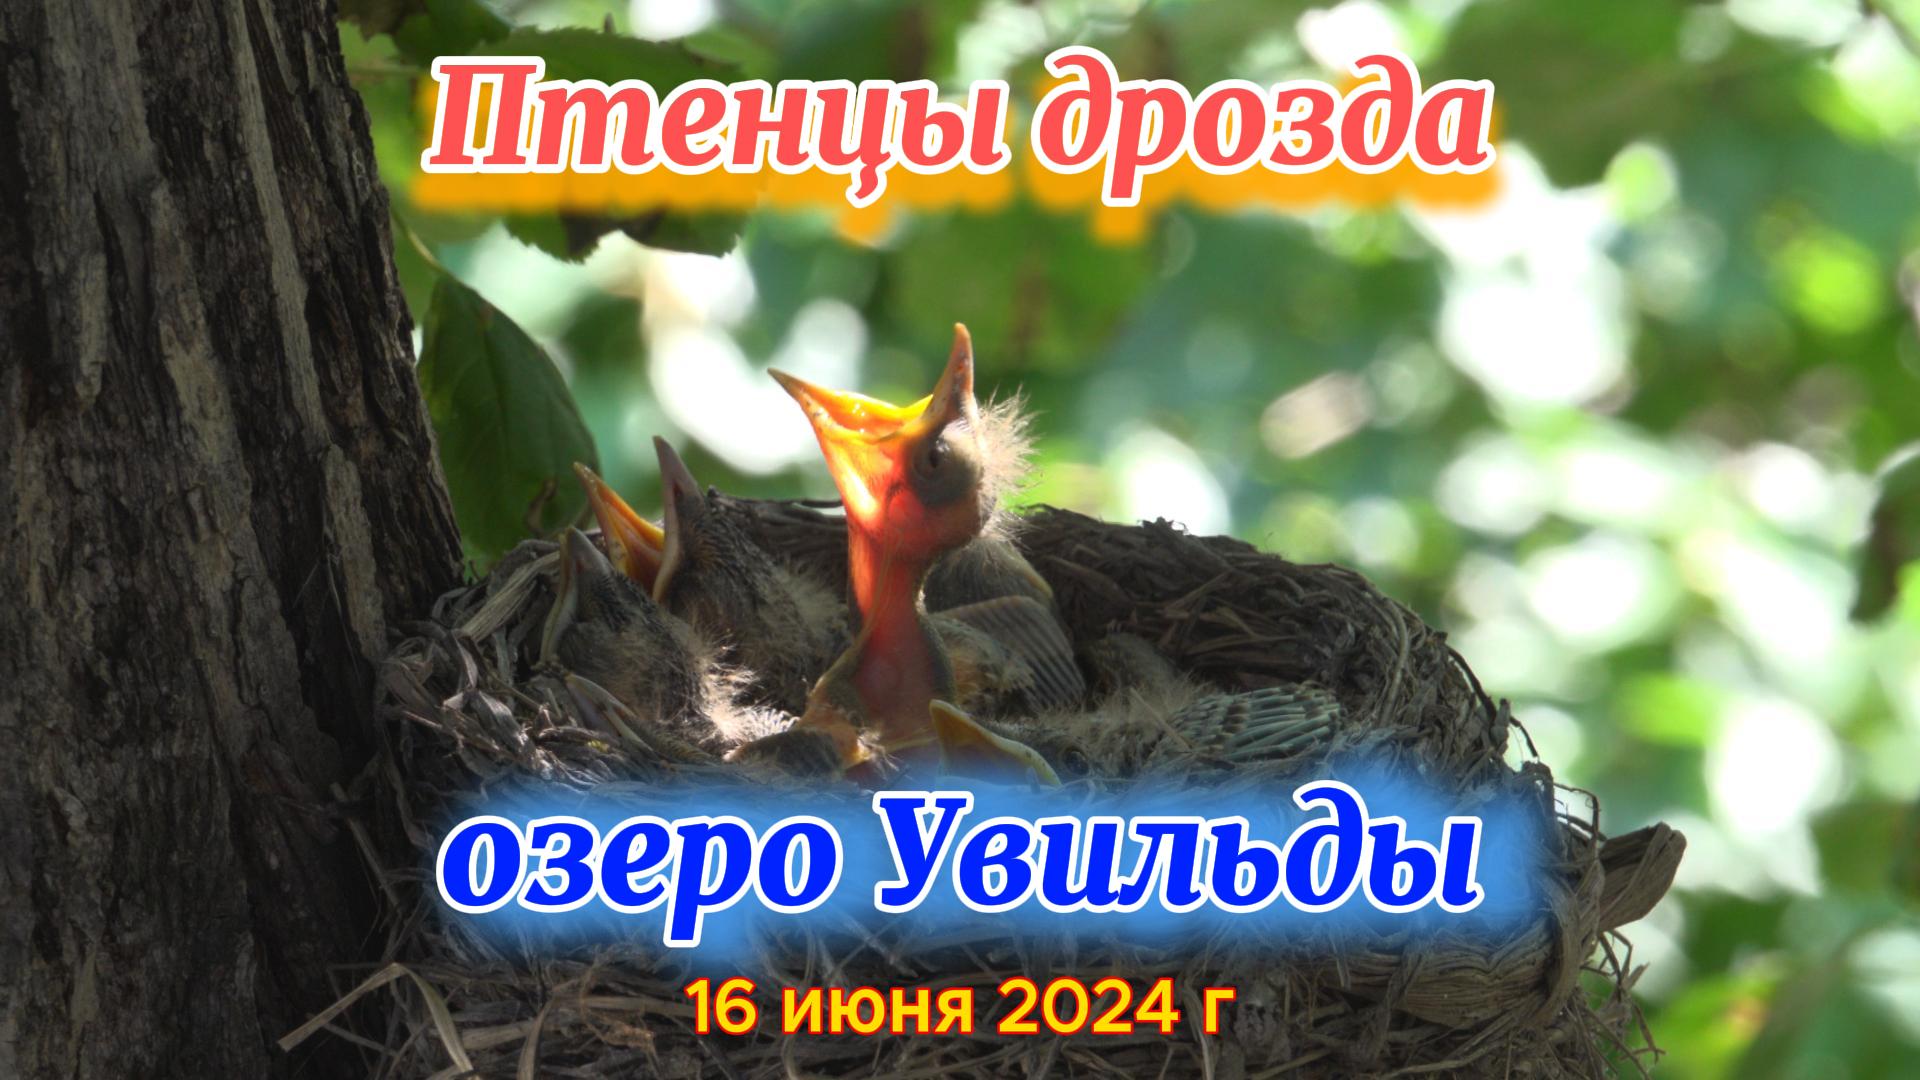 Птенцы дрозда и озеро Увильды 16 июня 2024 г